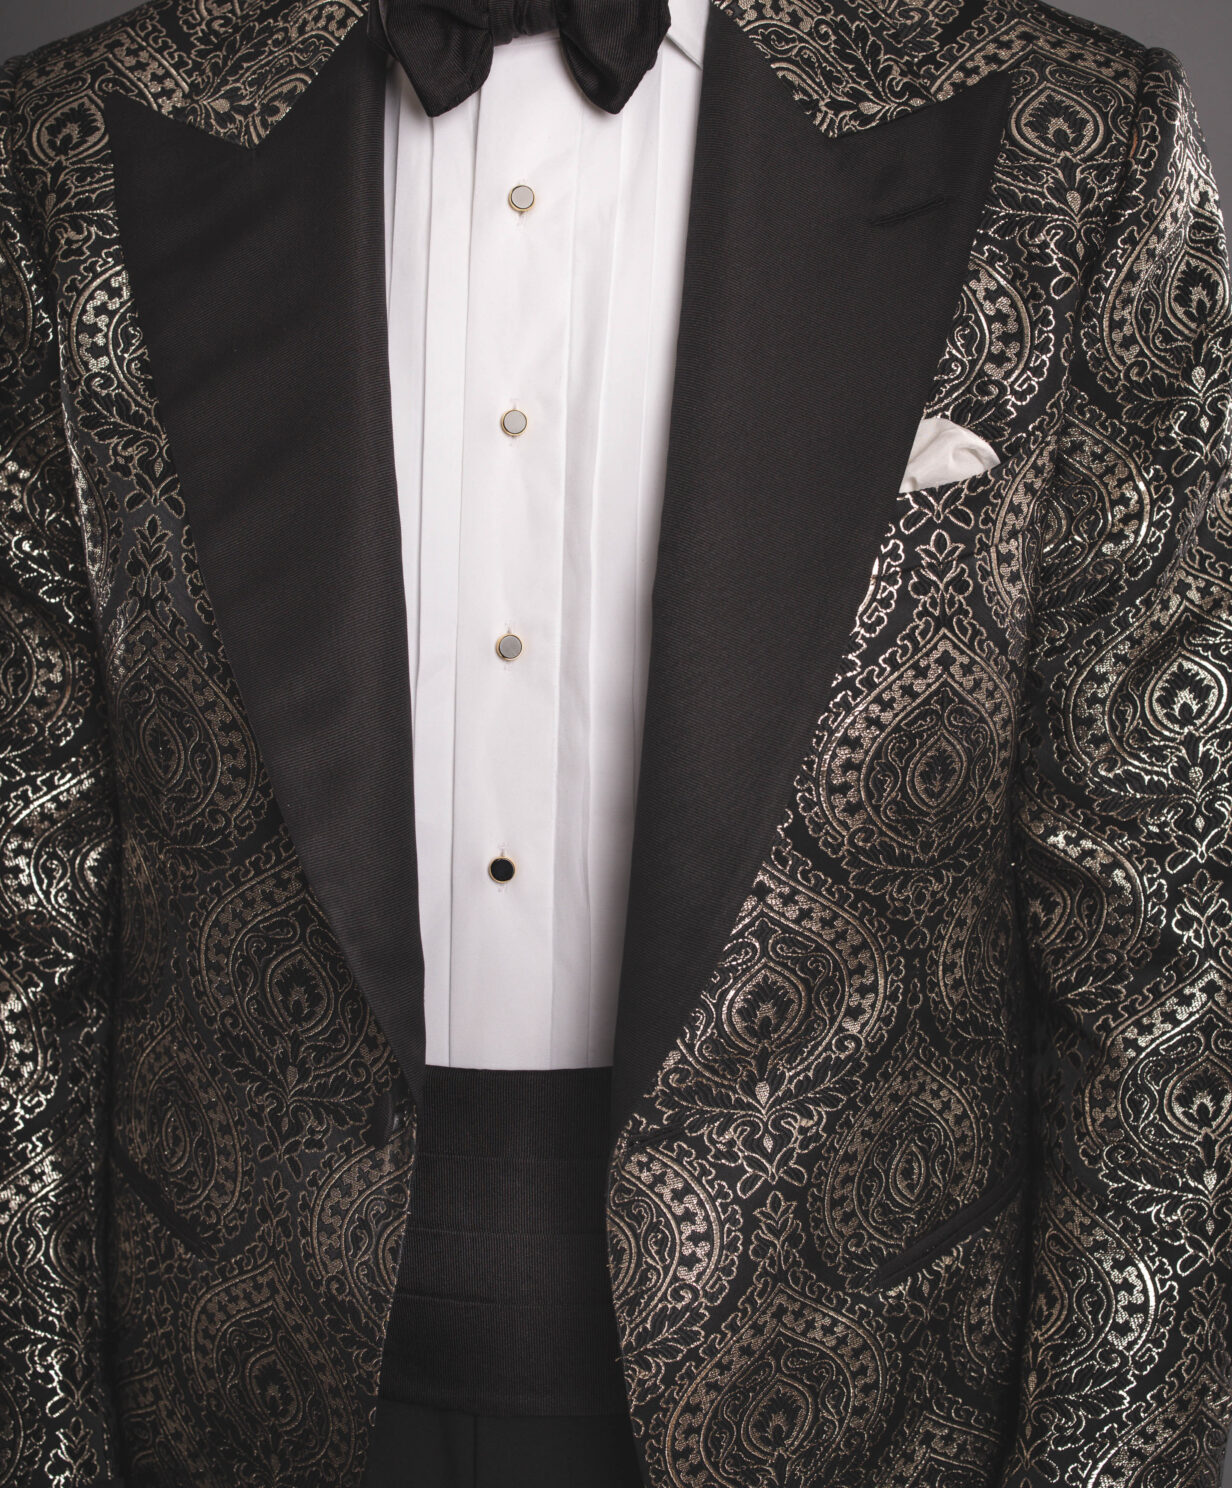 Black & Gold Jacquard Dinner Jacket Formal Outfit Idea | He Spoke Style